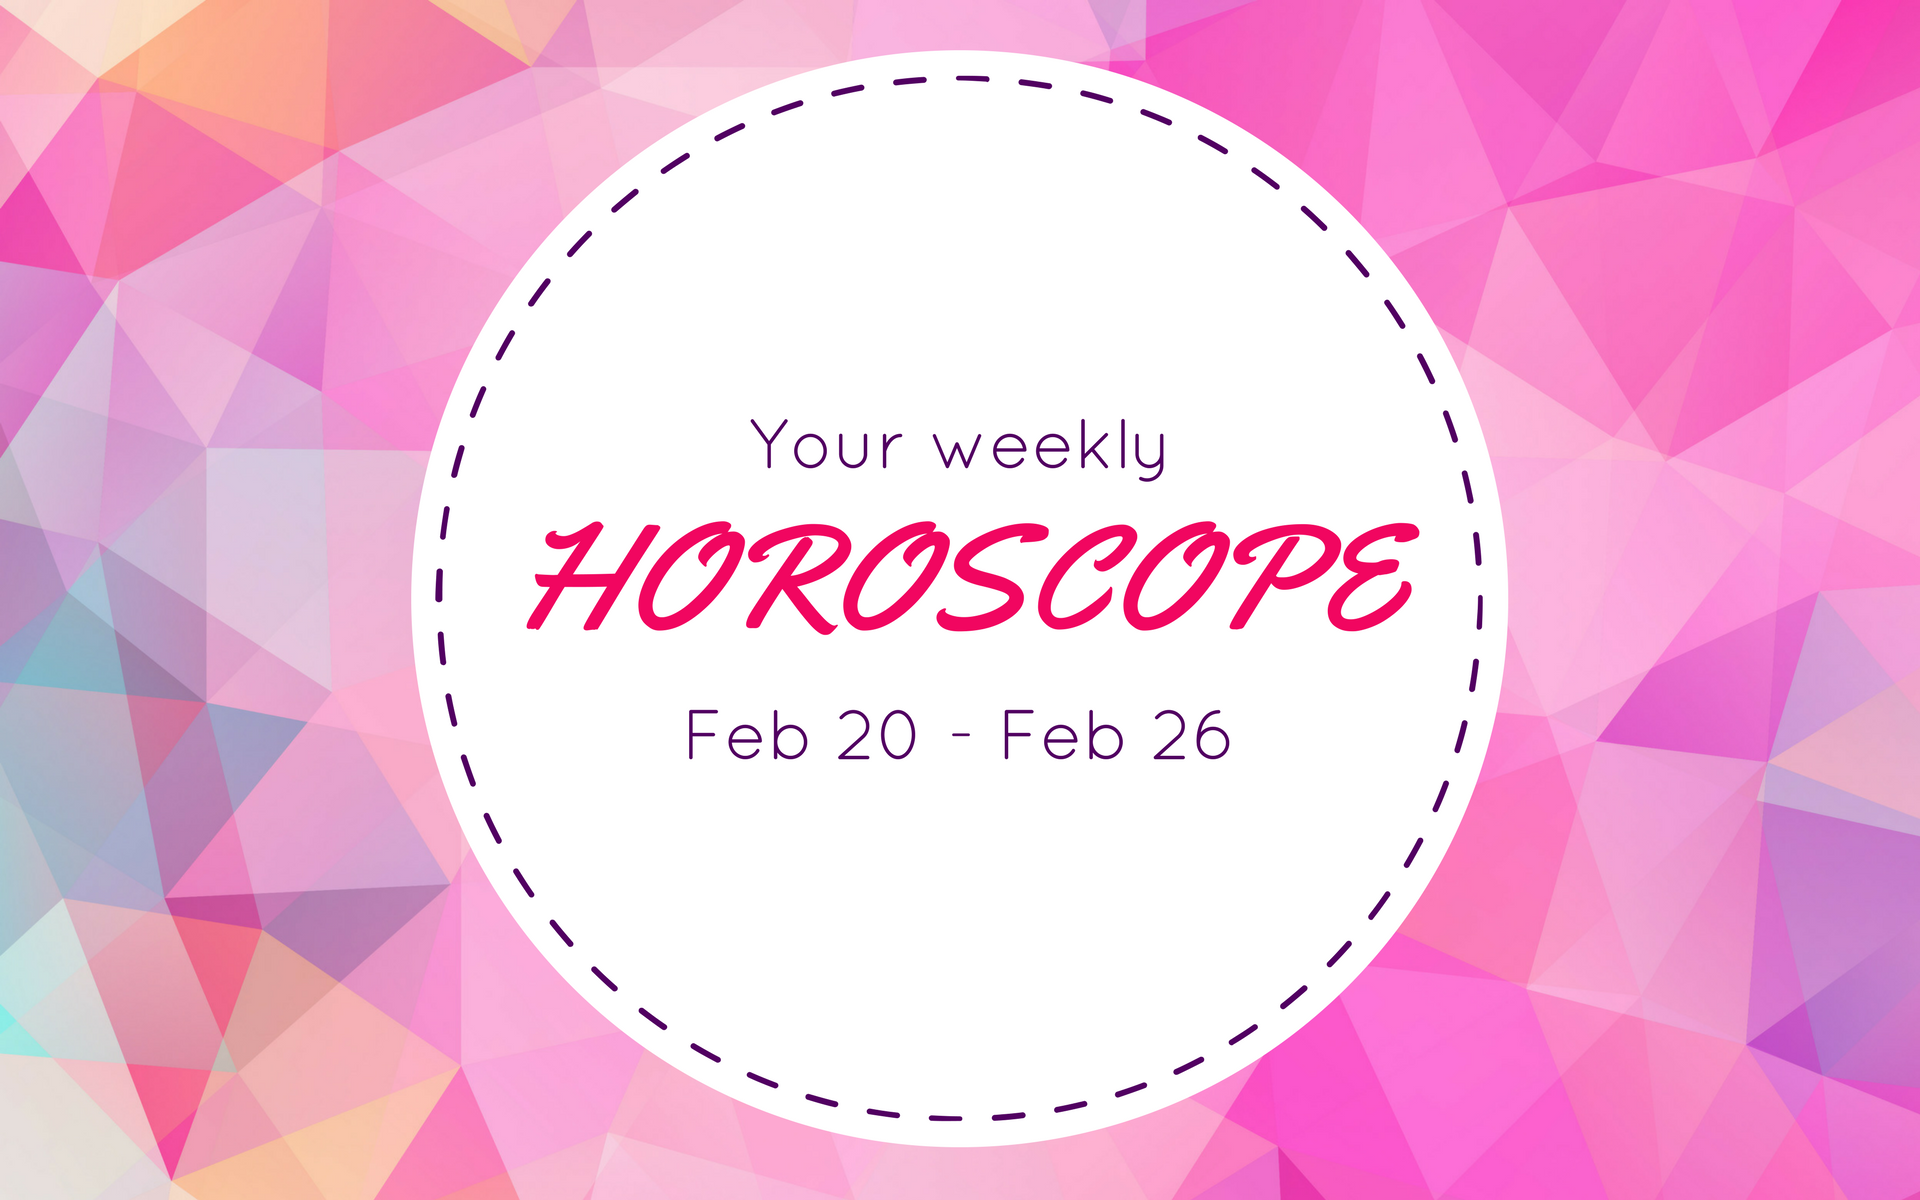 Your Weekly Horoscope: Feb 20 - Feb 26